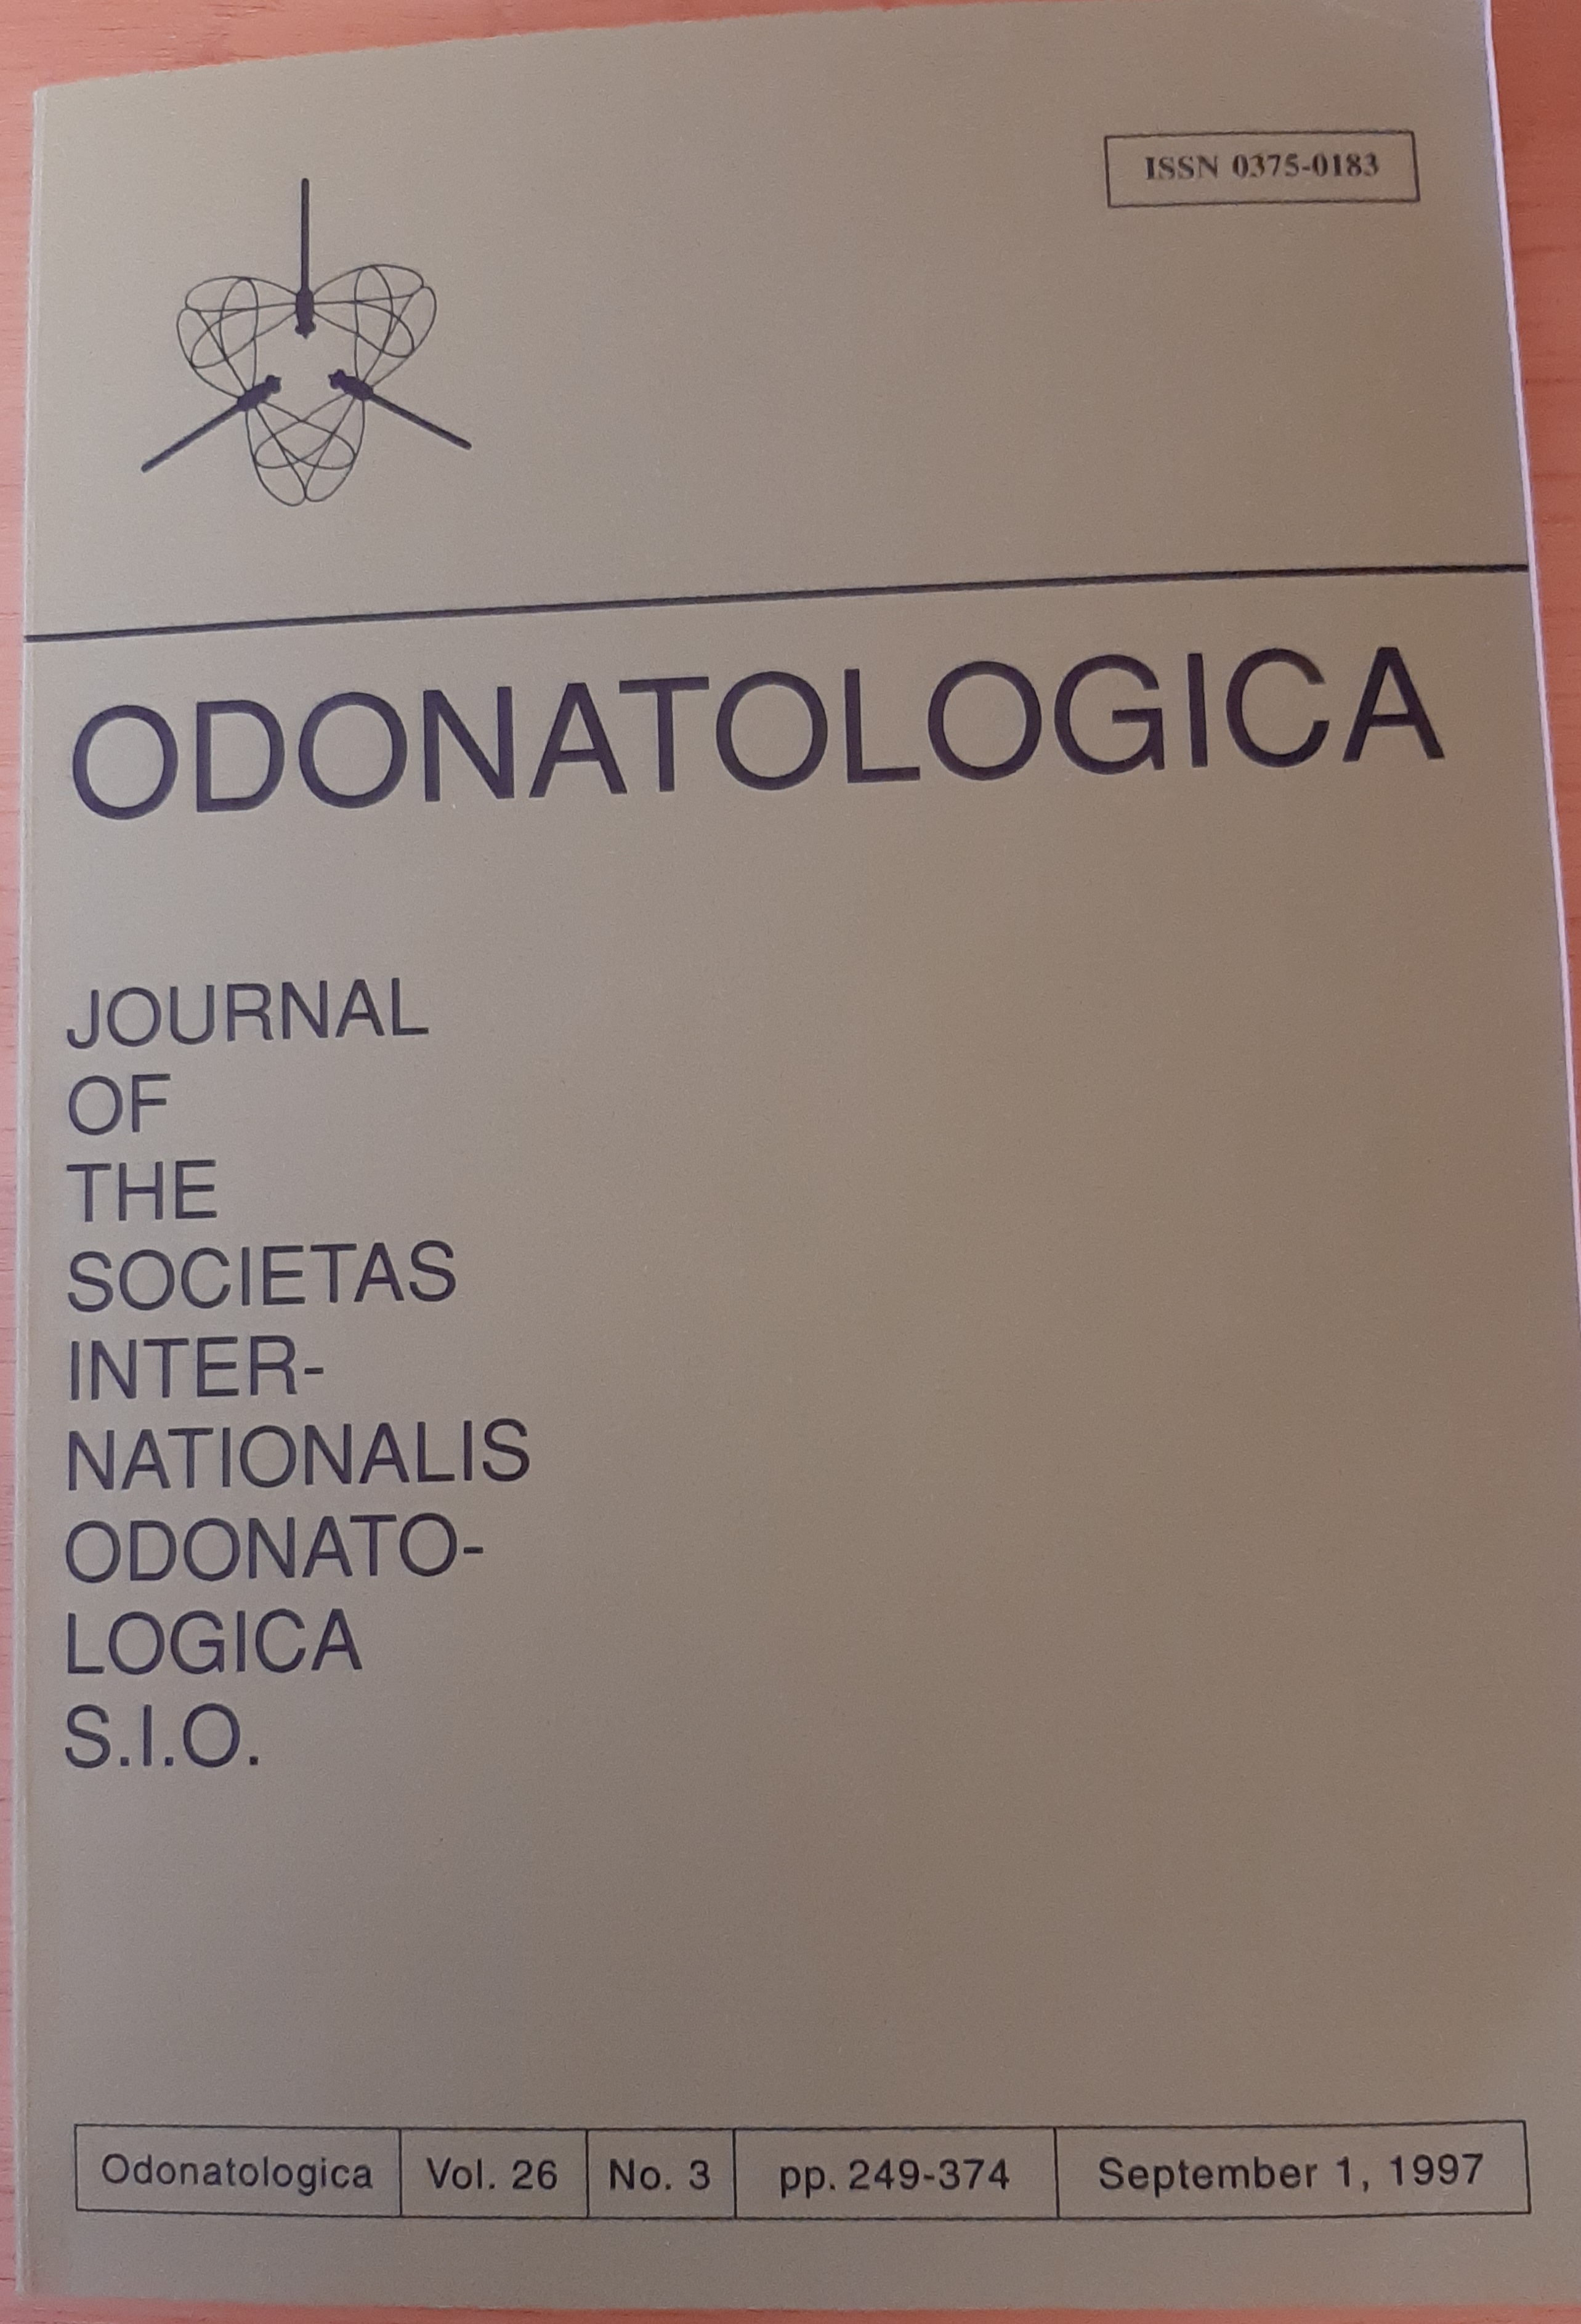 Odonatologica 1997/26. évf. 3. szám Journal of the Societas Internationalis Odonatologica S.I.O. (Rippl-Rónai Múzeum RR-F)